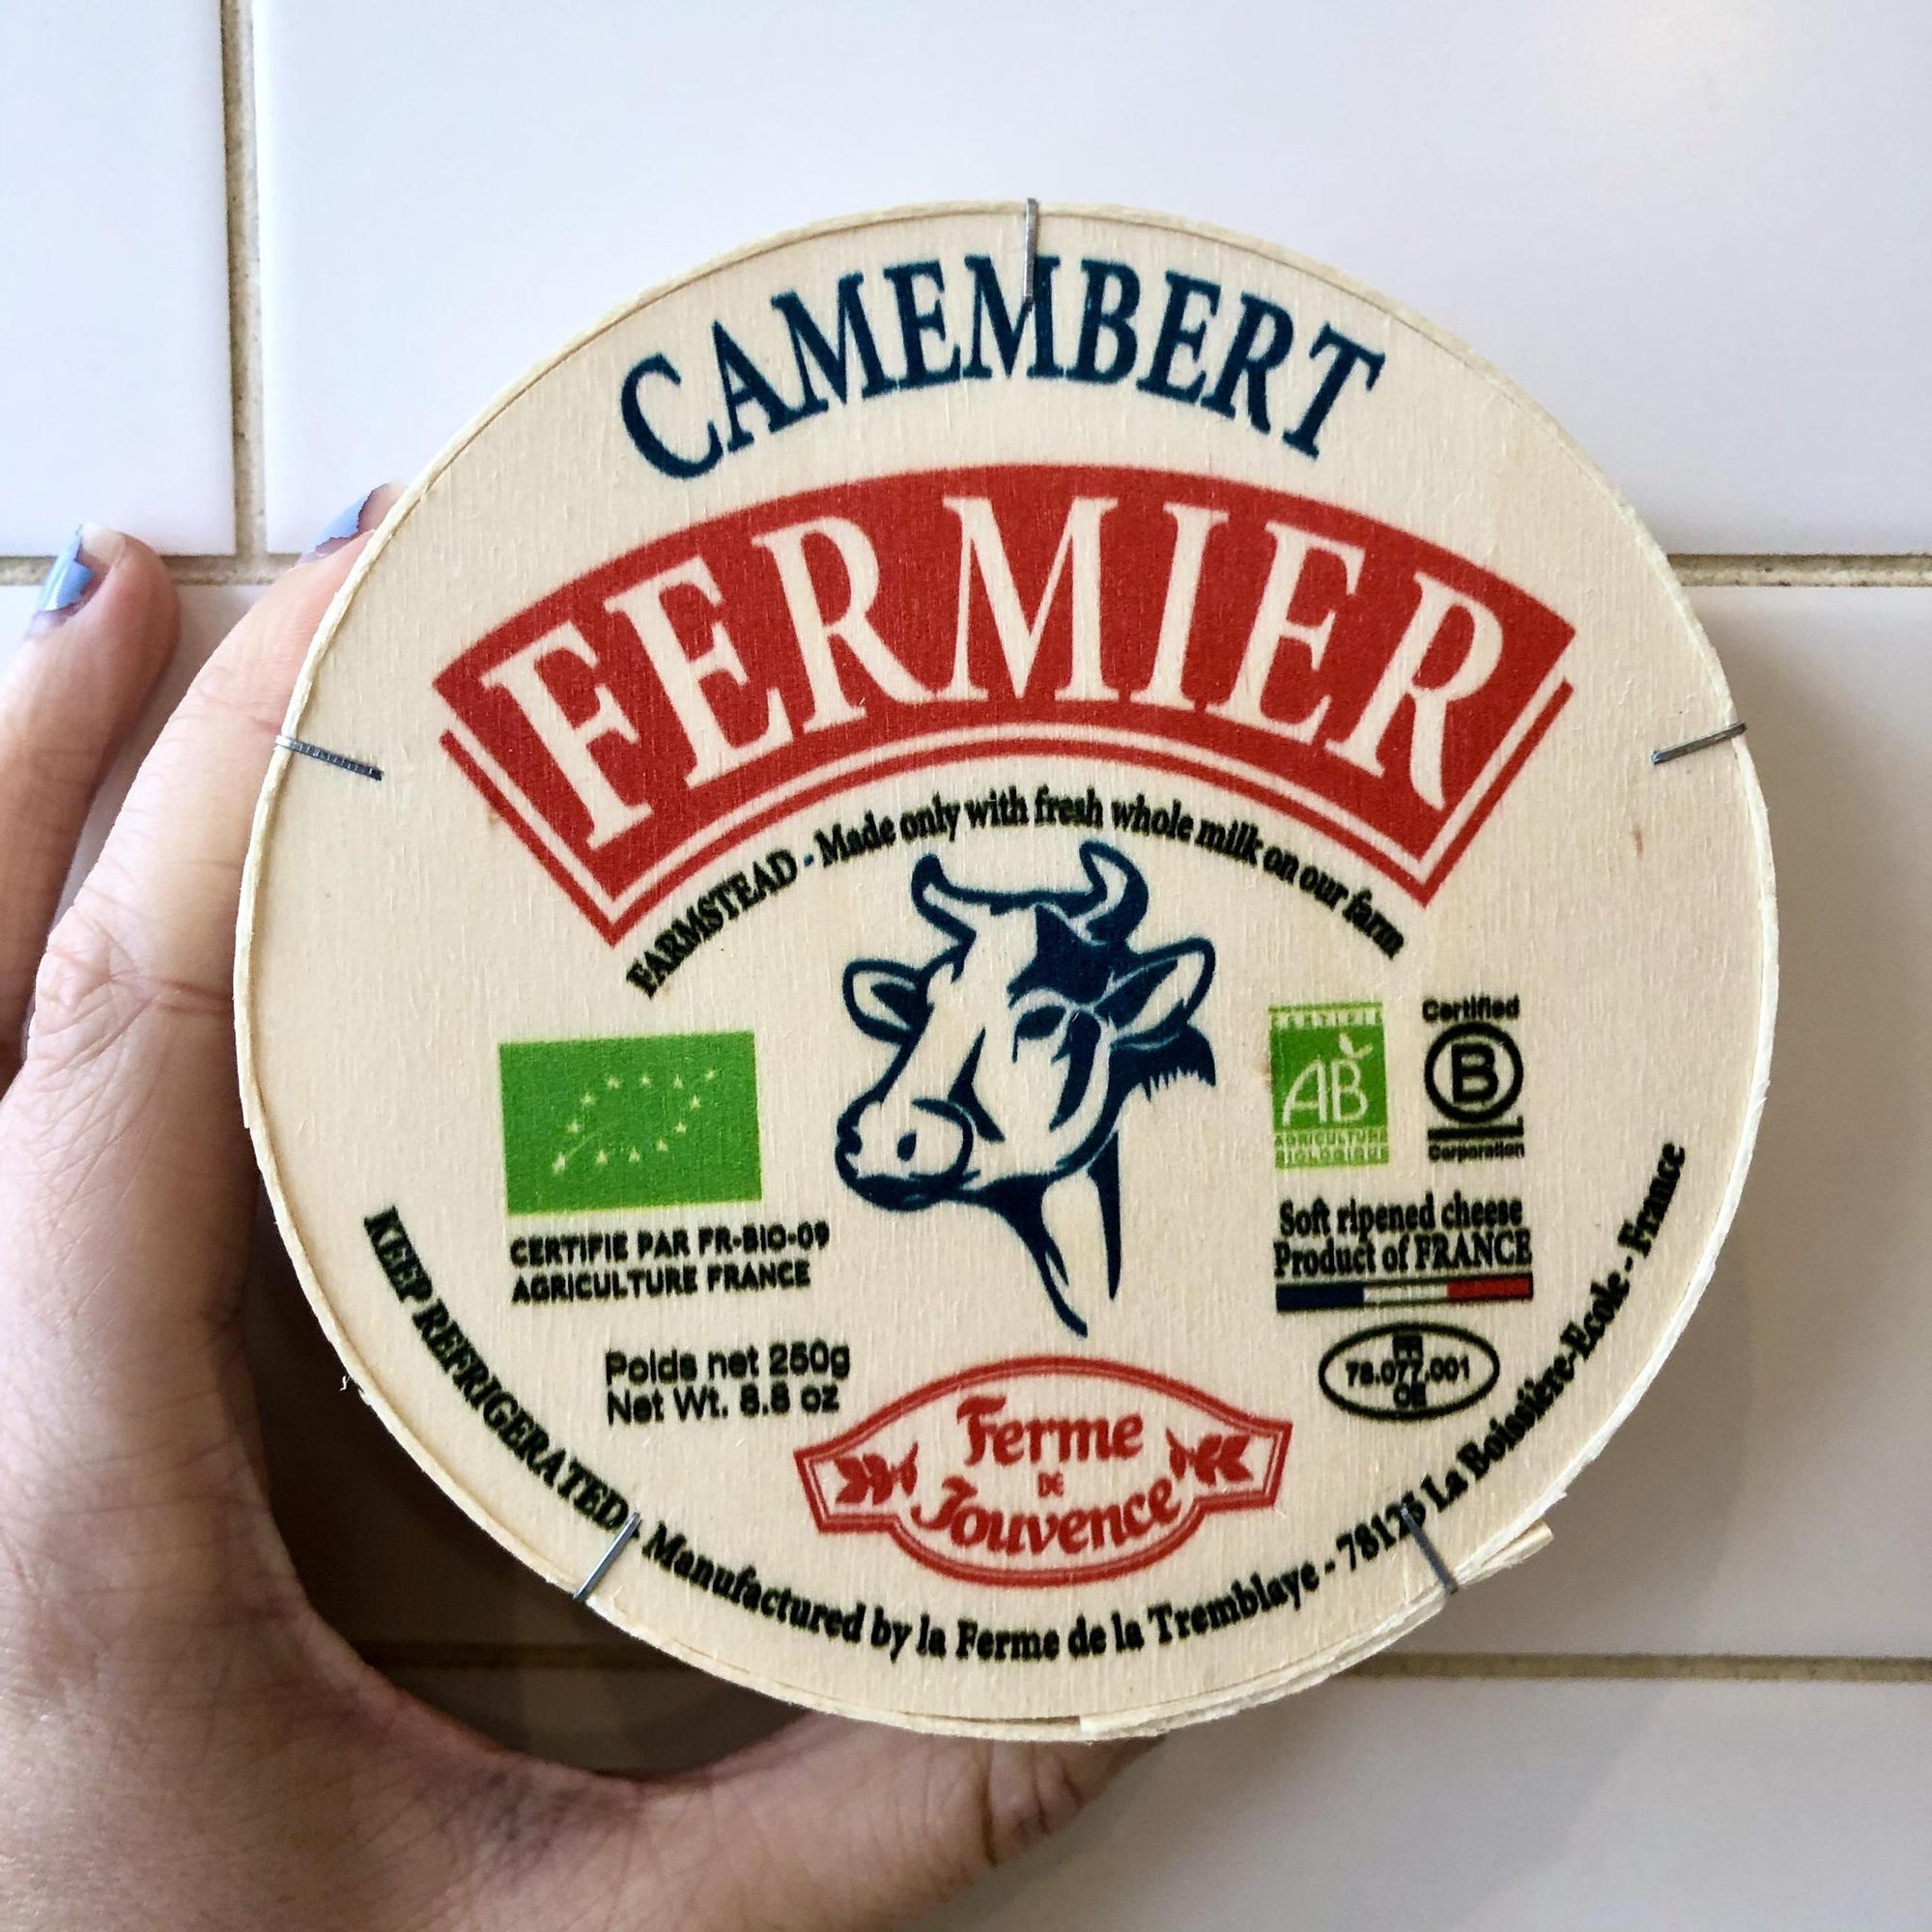 Camembert Fermier de Tremblaye